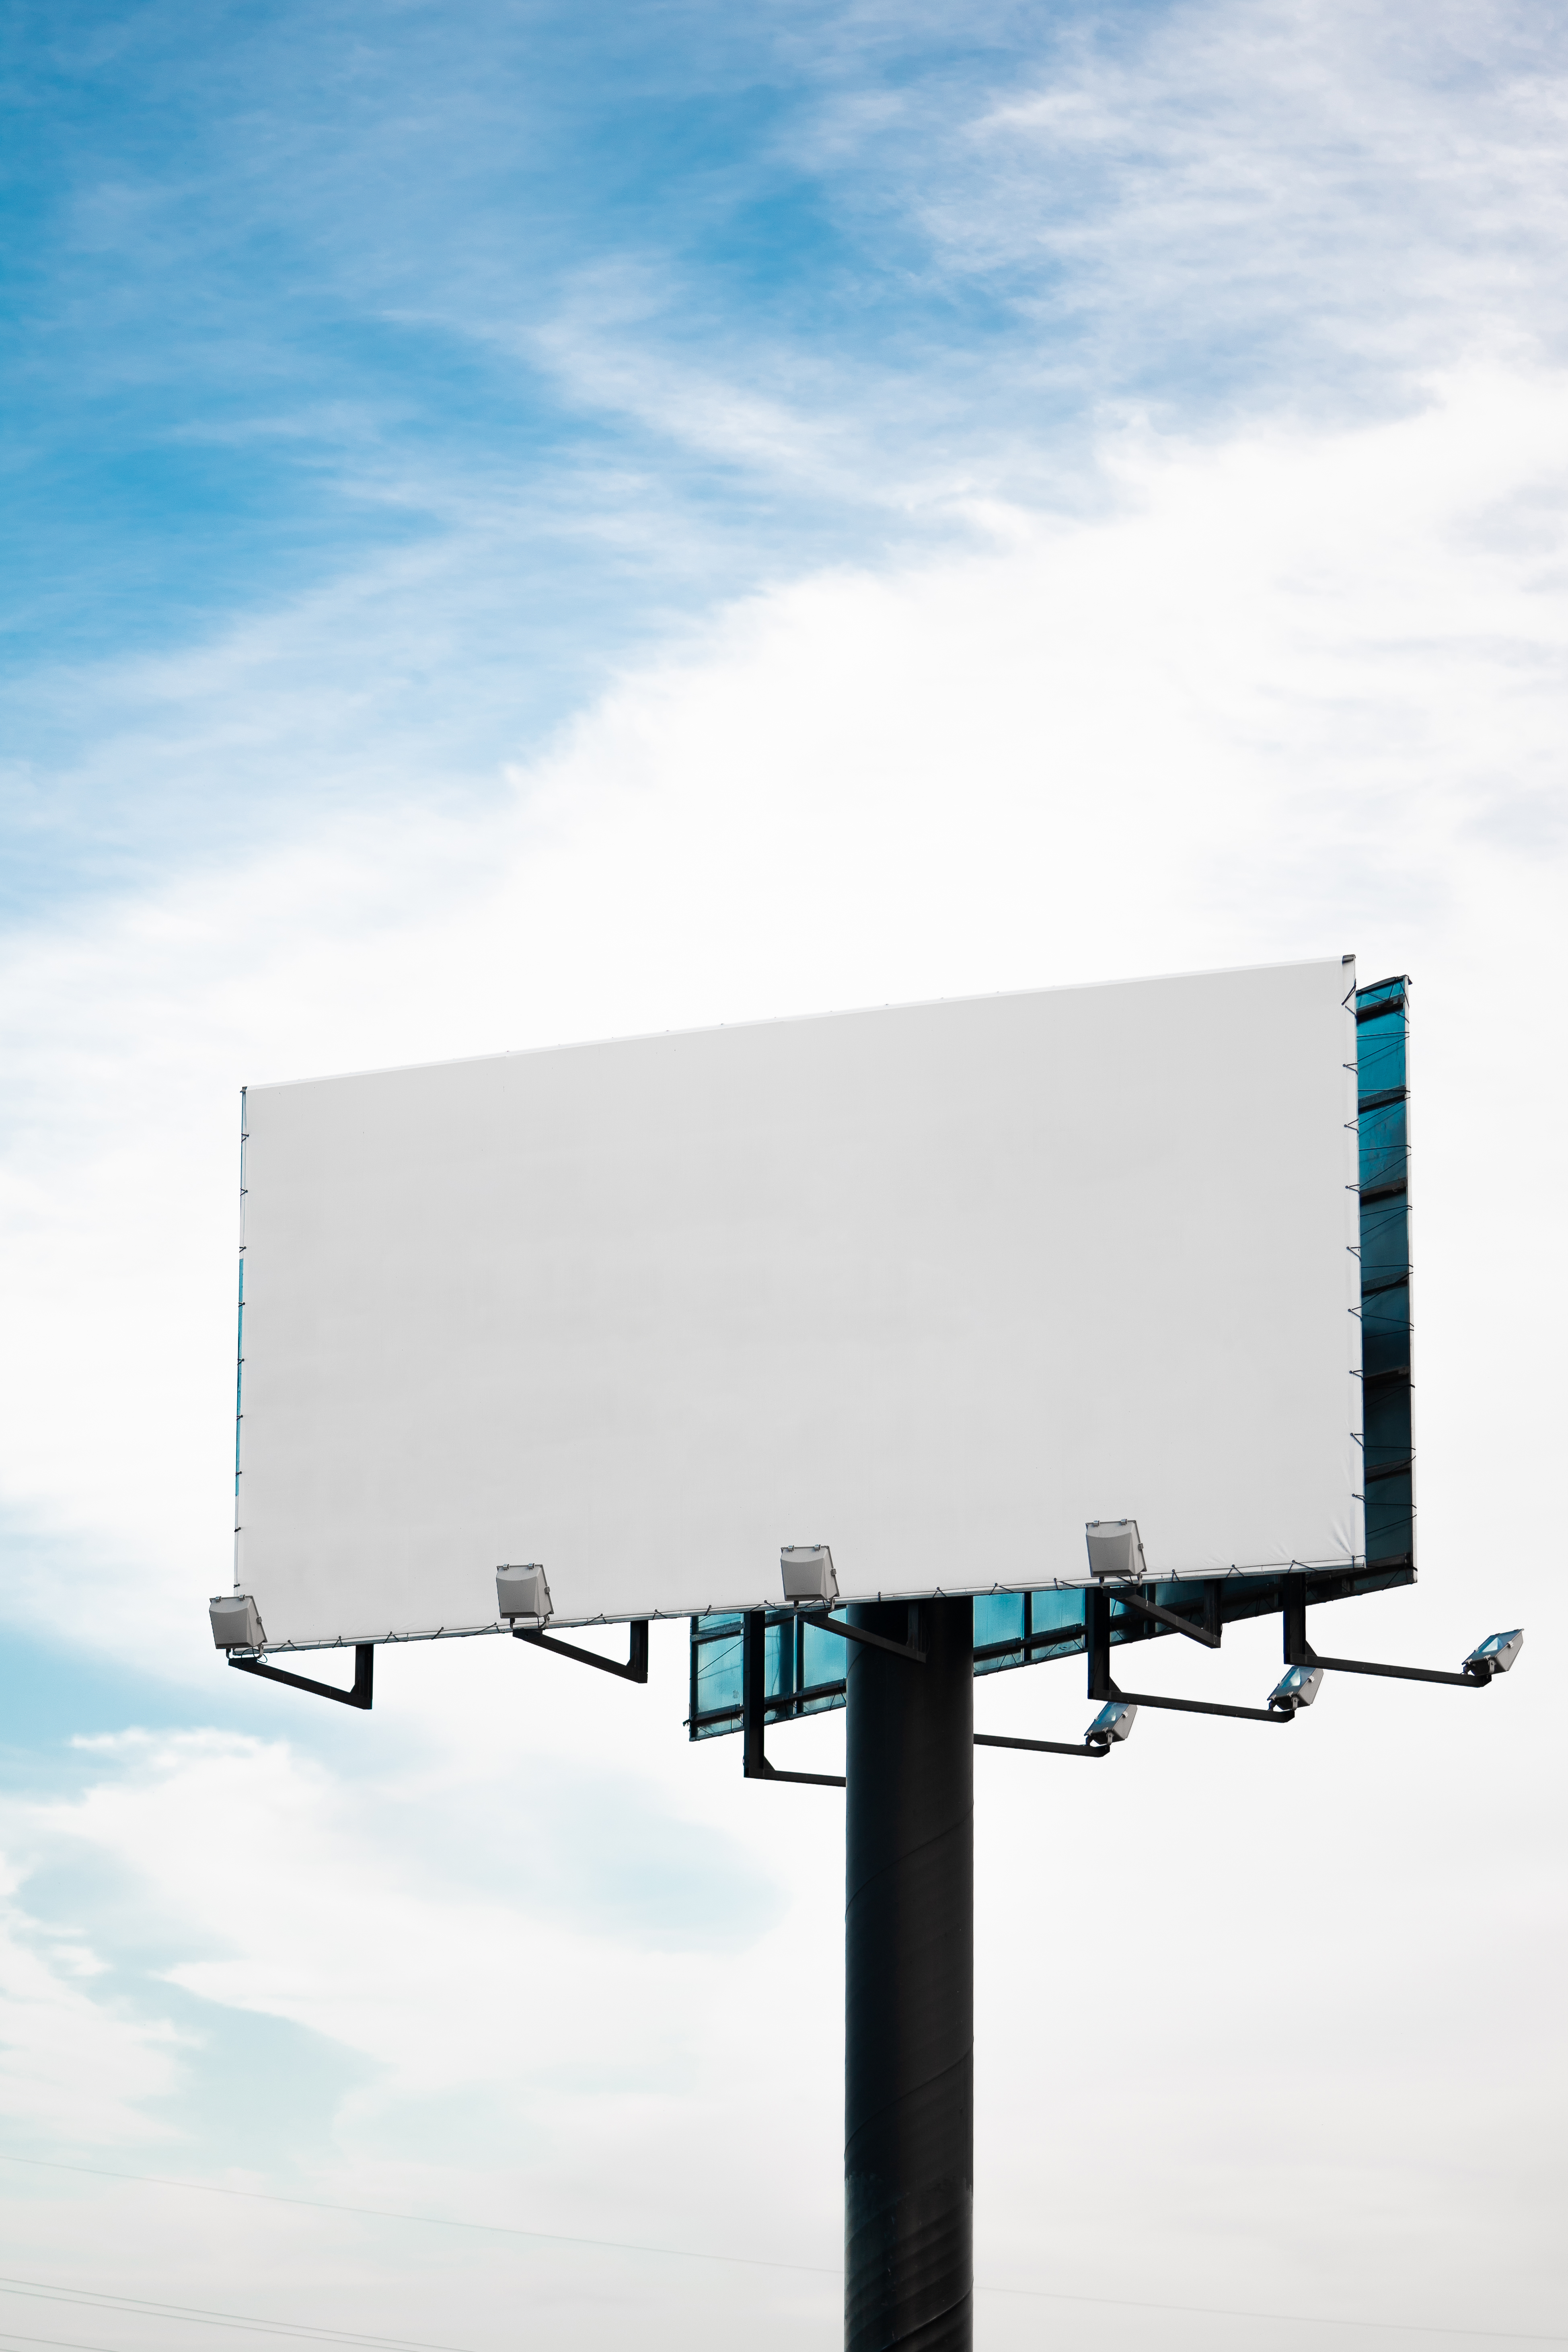 advertising billboard sign